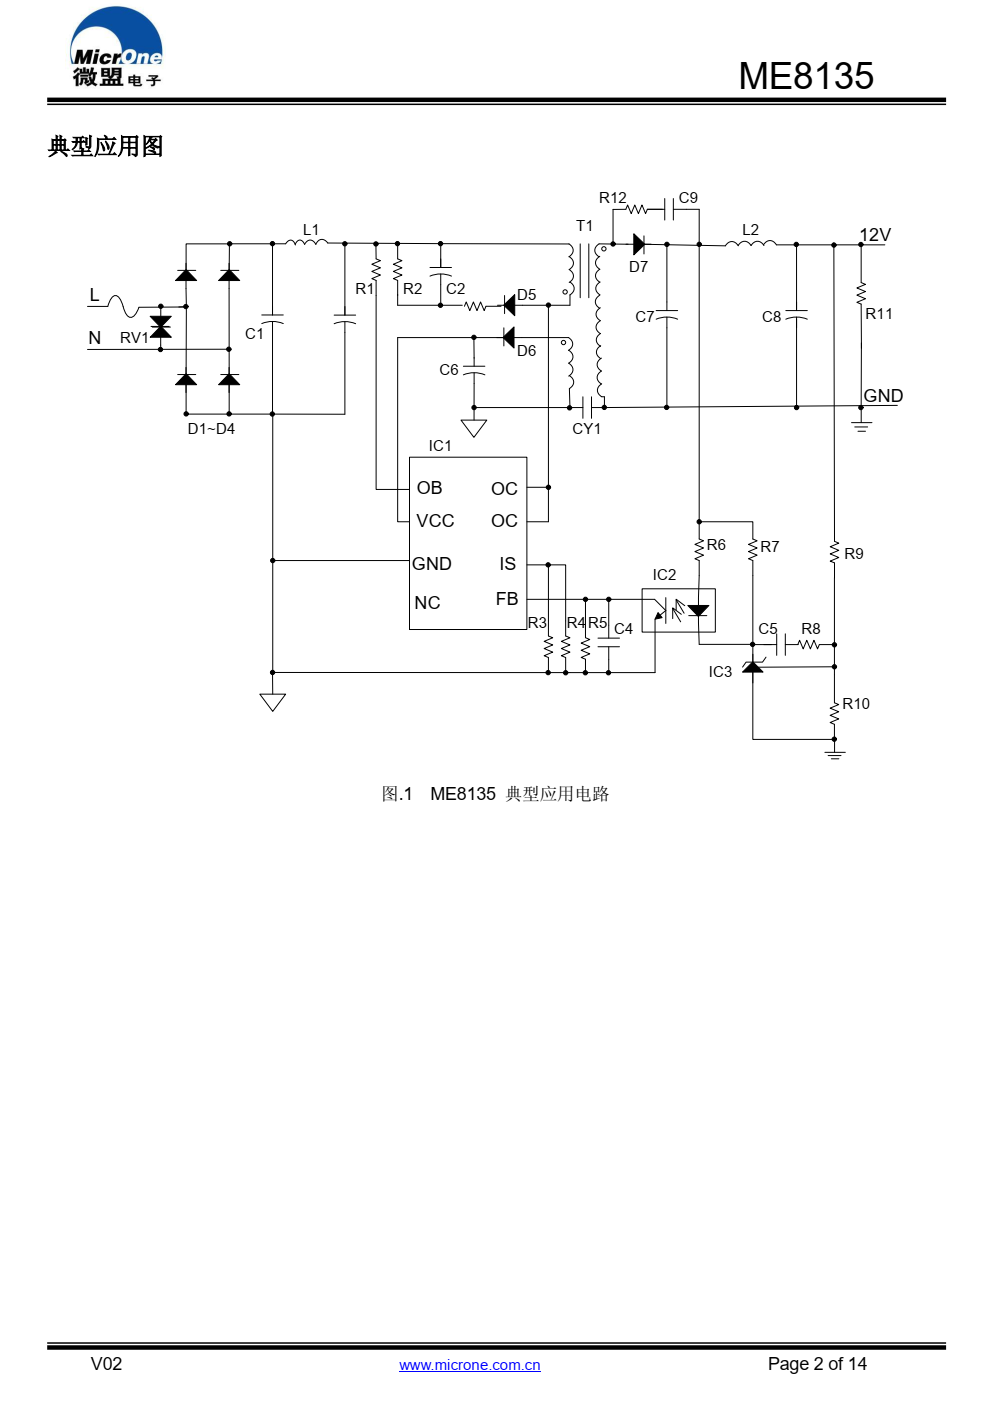 ME8135高性能电流模式PWM控制器，专为高性价比AC/DC 转换器设计